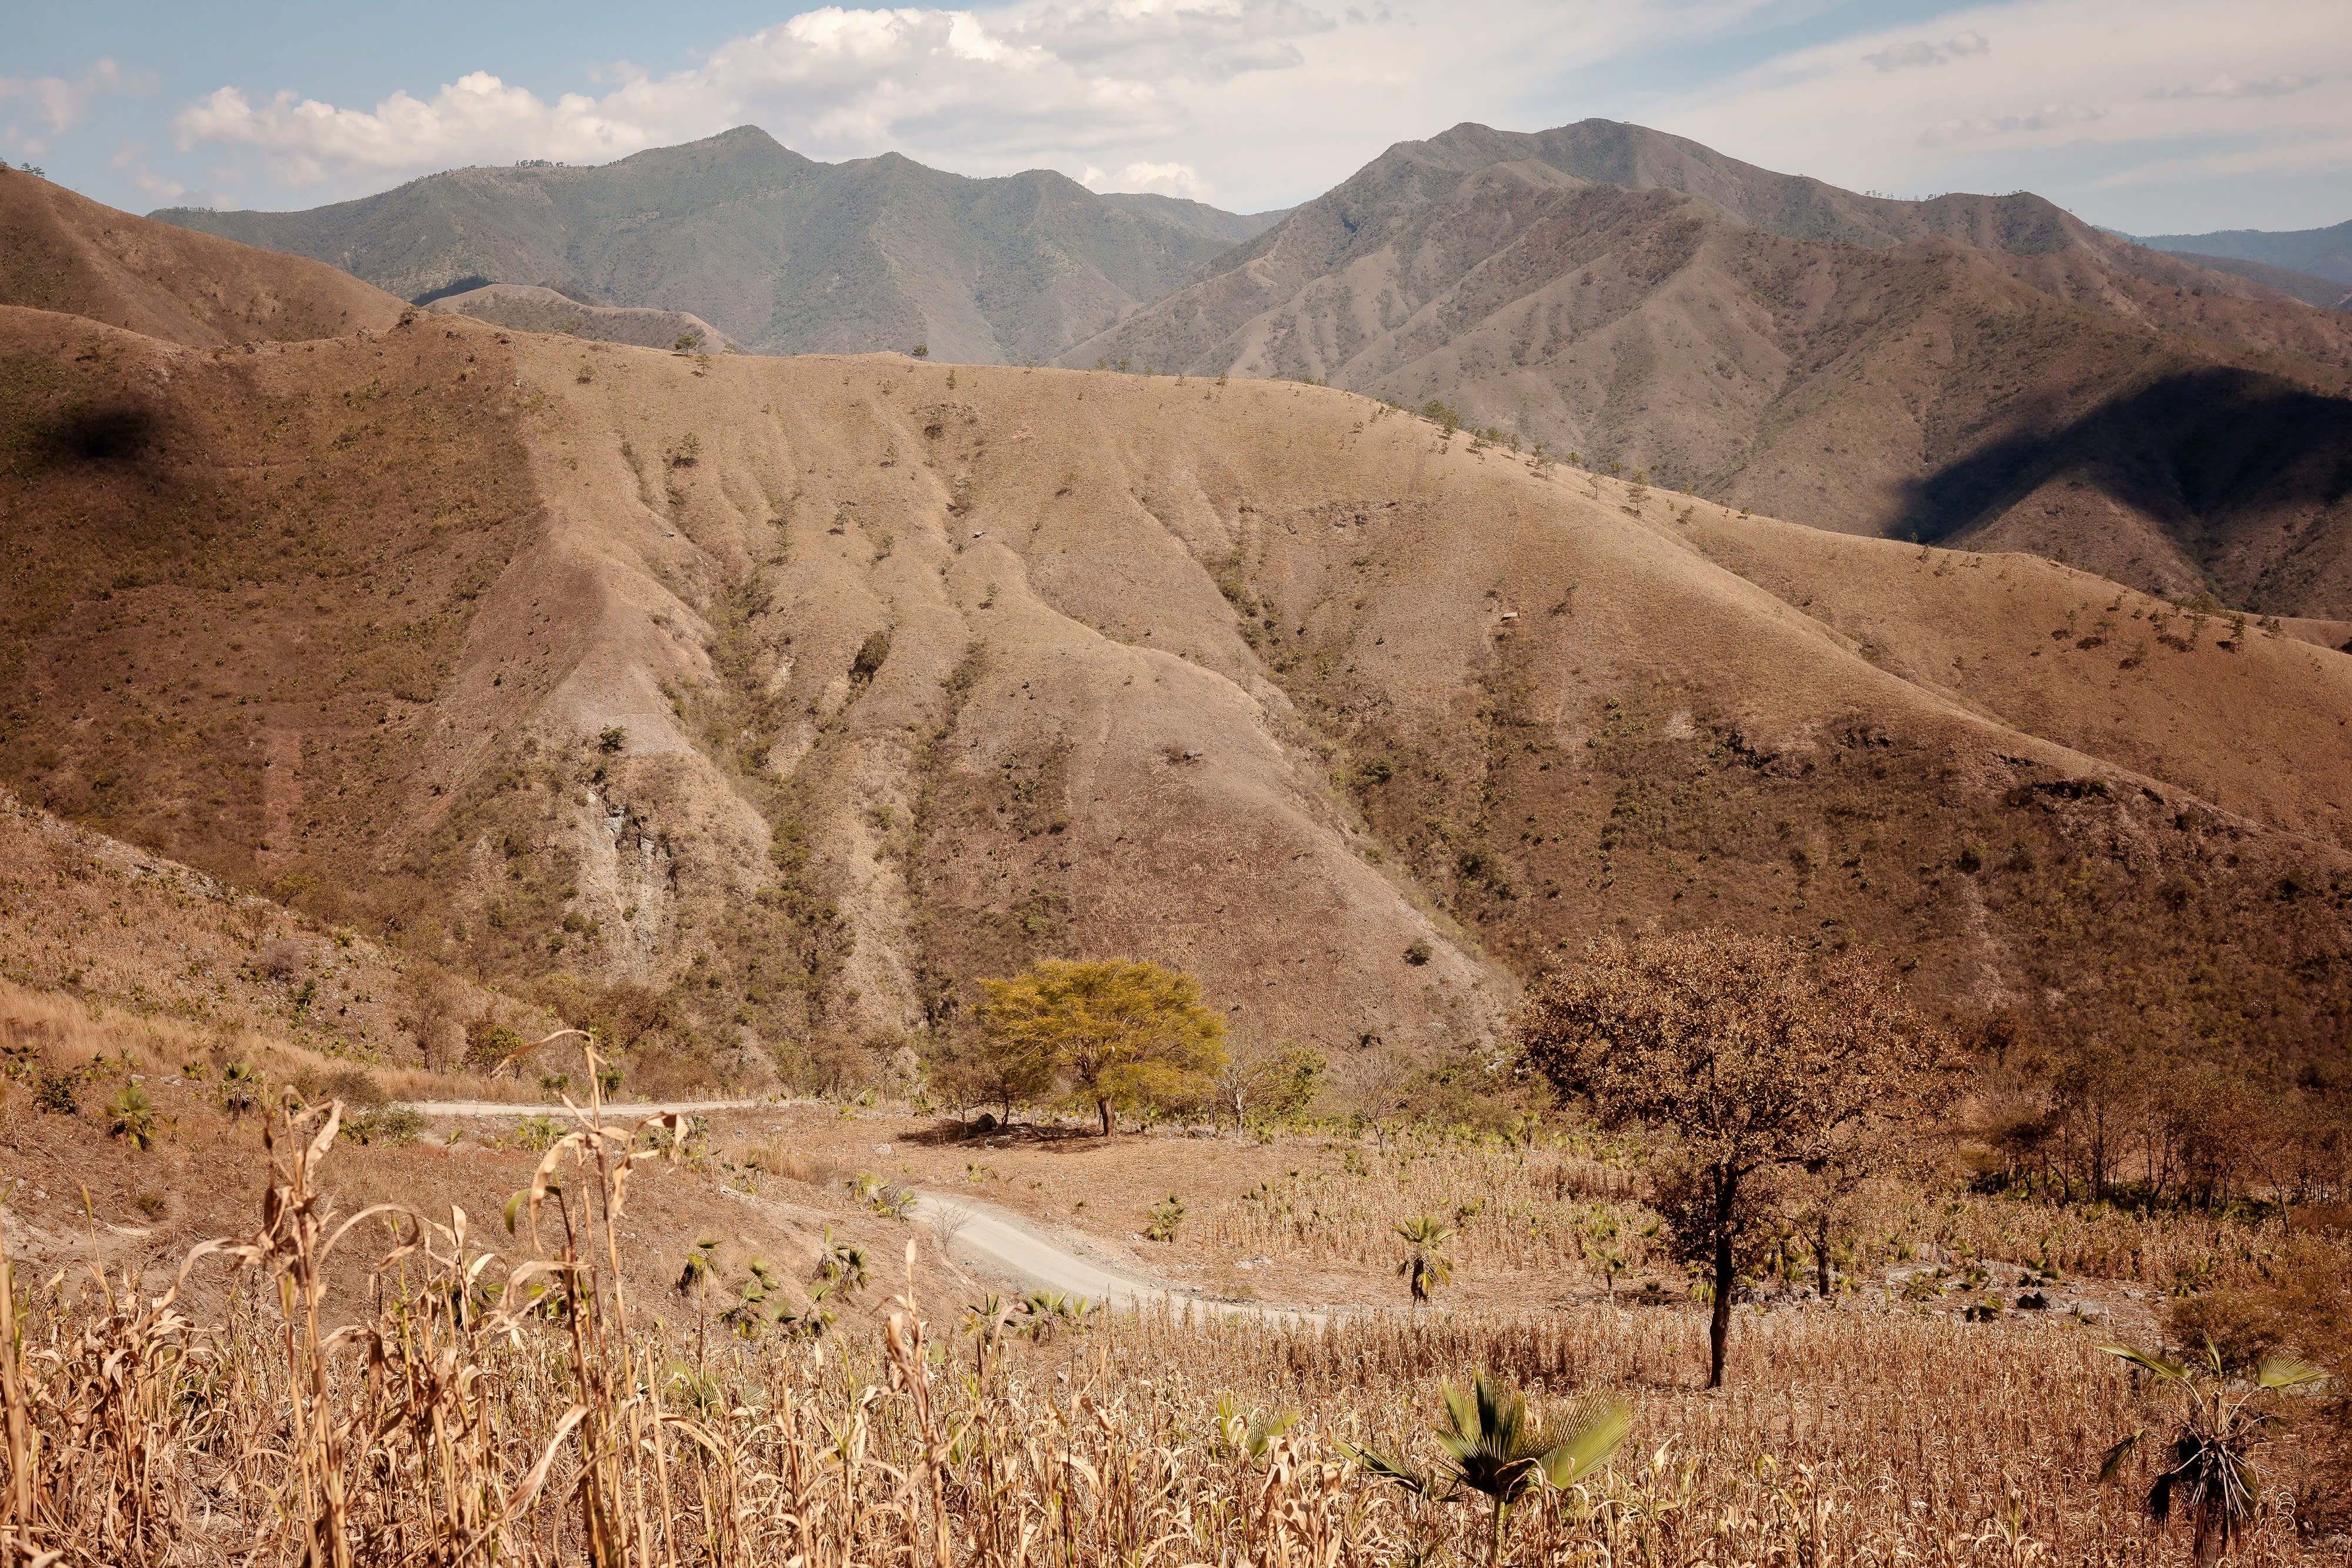 A landscape of the Dry Corridor region in Guatemala